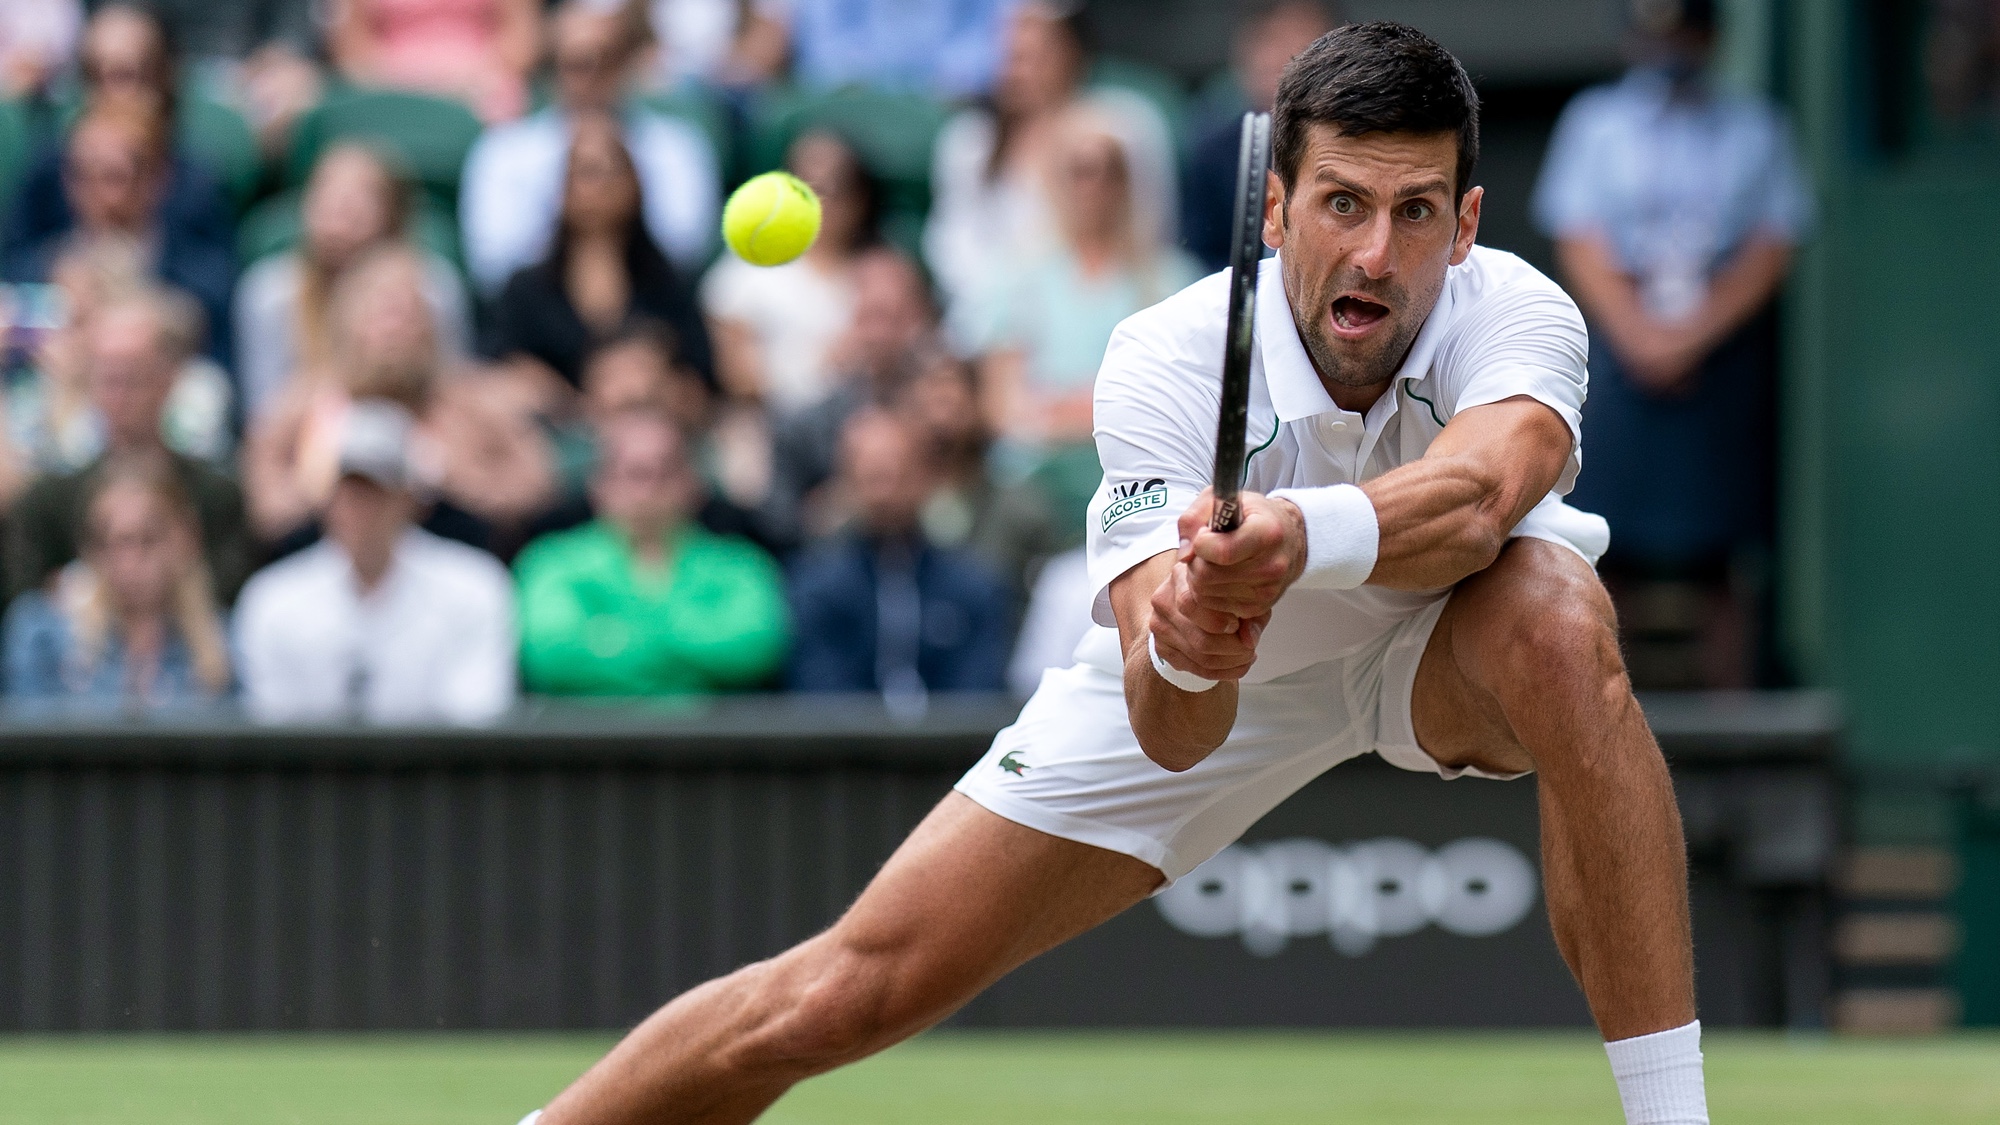 Novak Djokovic vs Denis Shapovalov live stream — how to watch Wimbledon match online Toms Guide